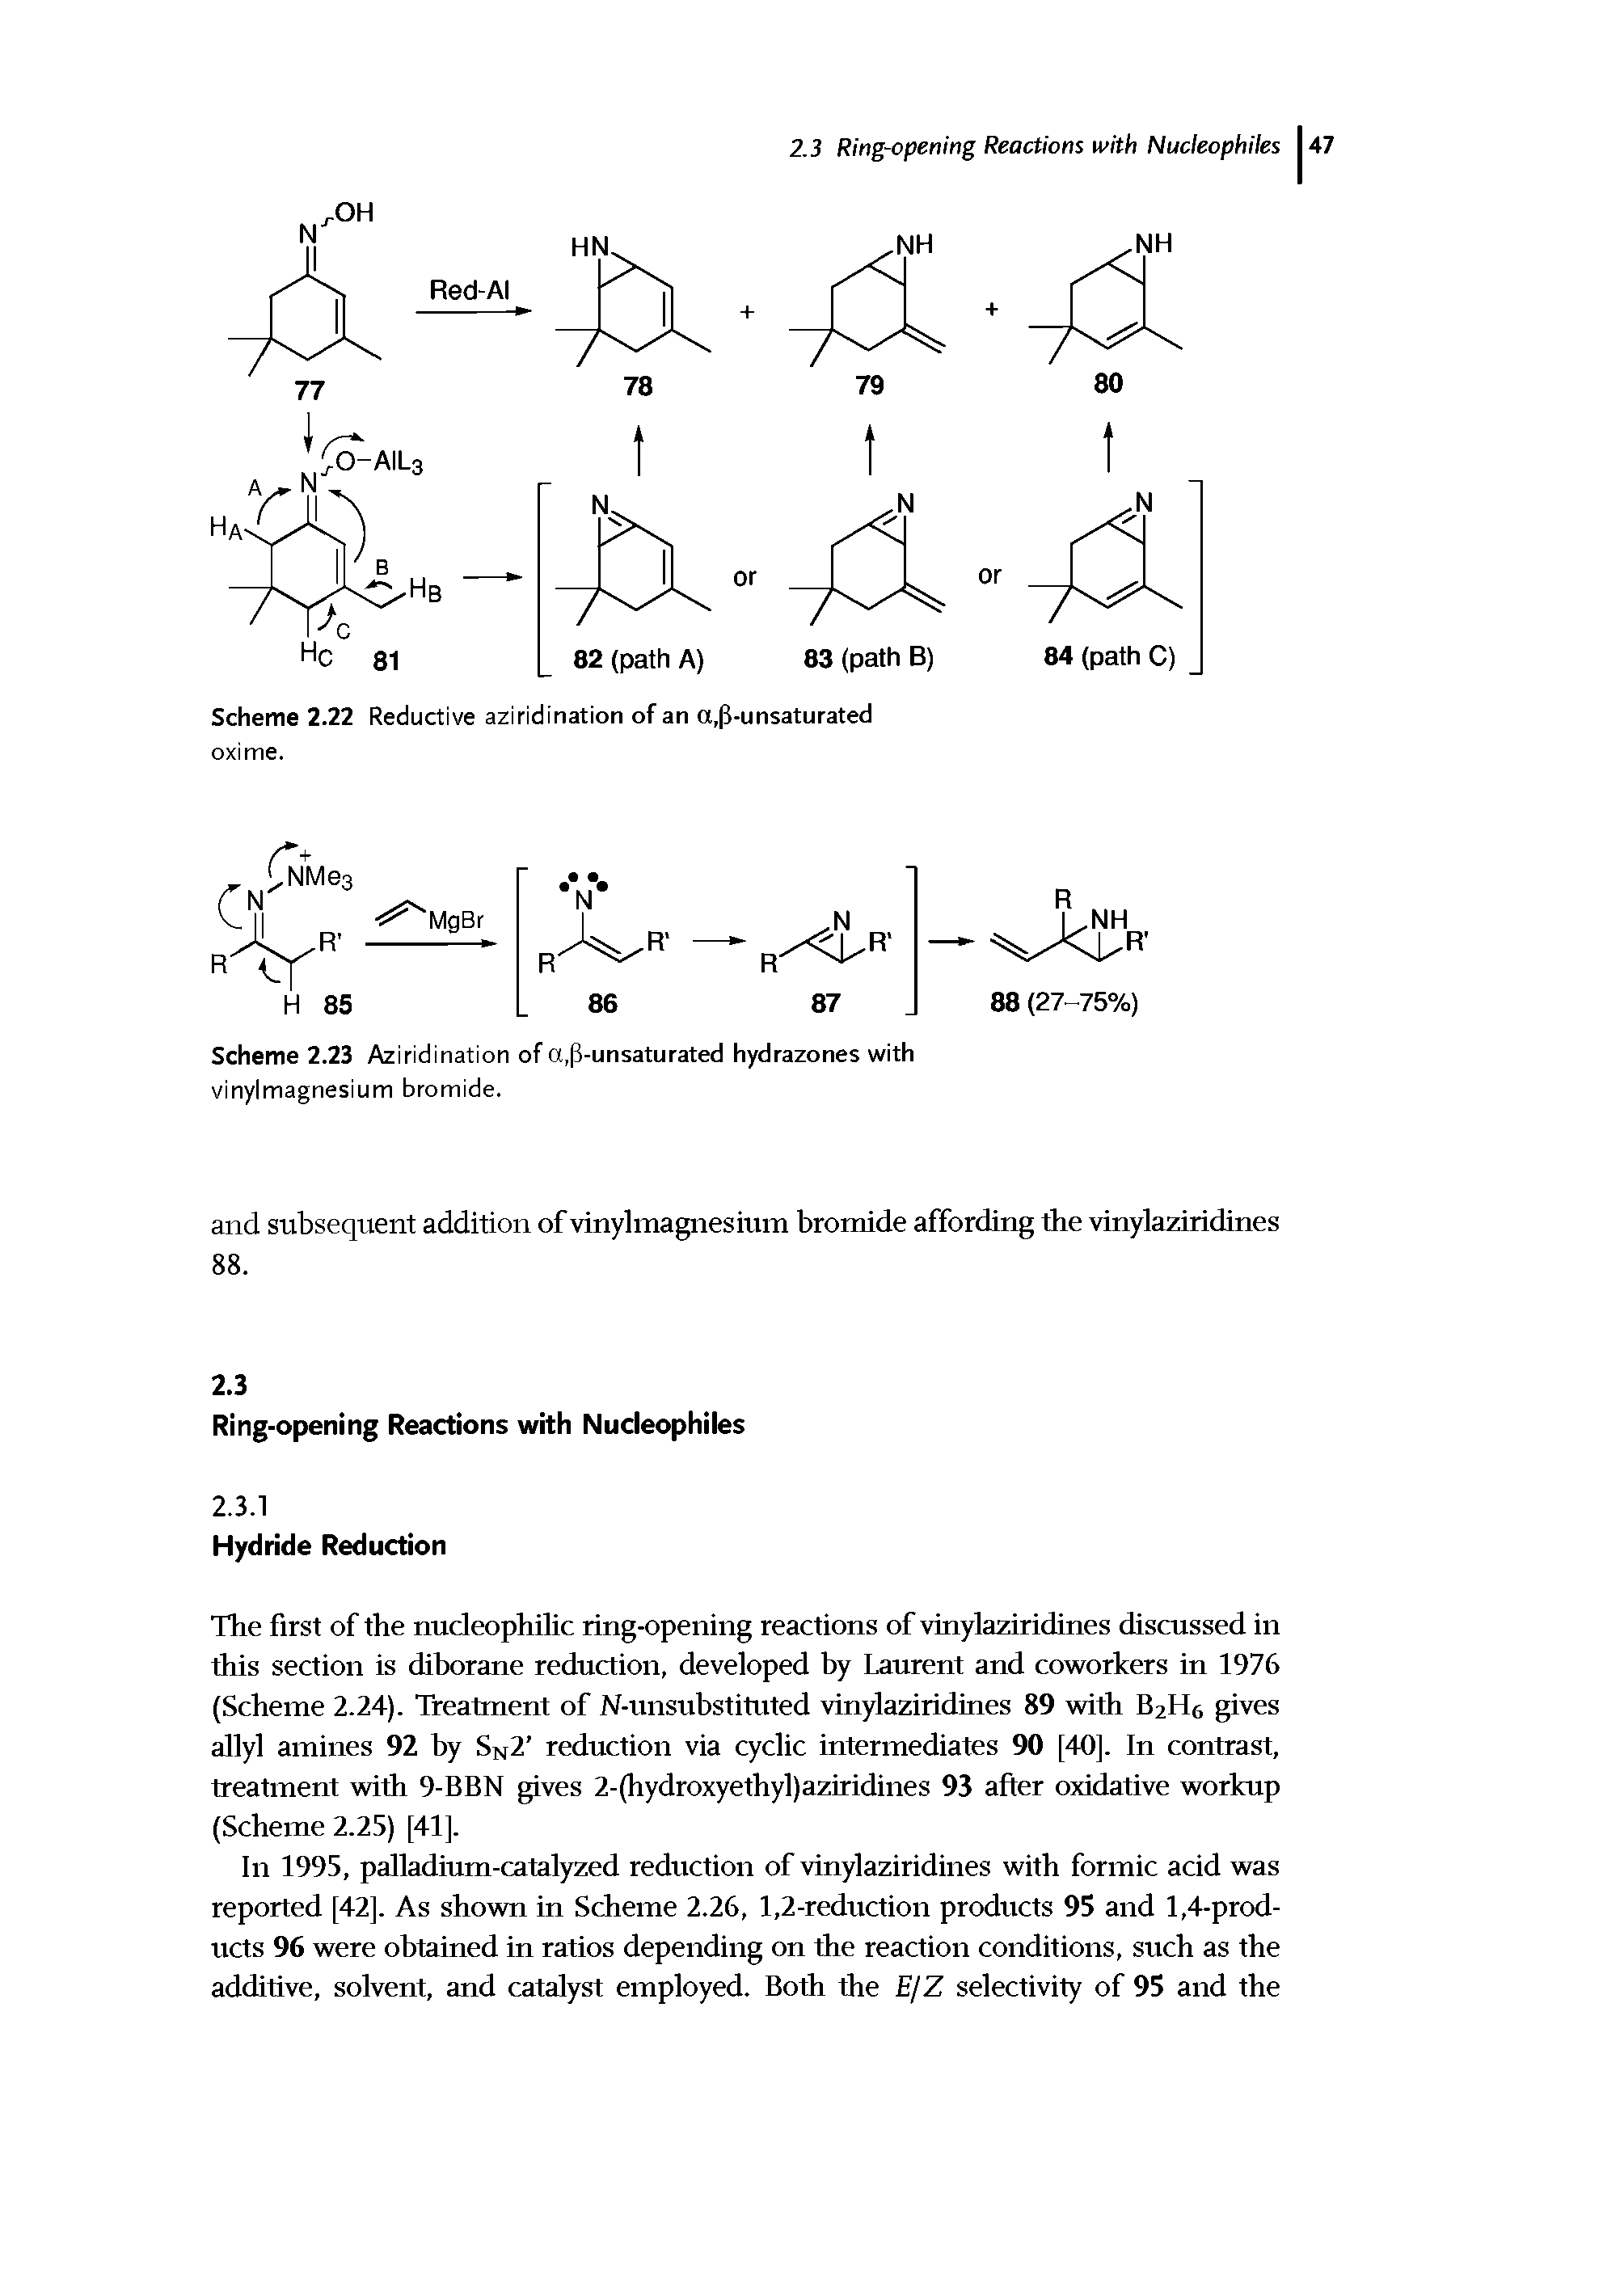 Scheme 2.23 Aziridination of aji-unsaturated hydrazones with vinylmagnesium bromide.